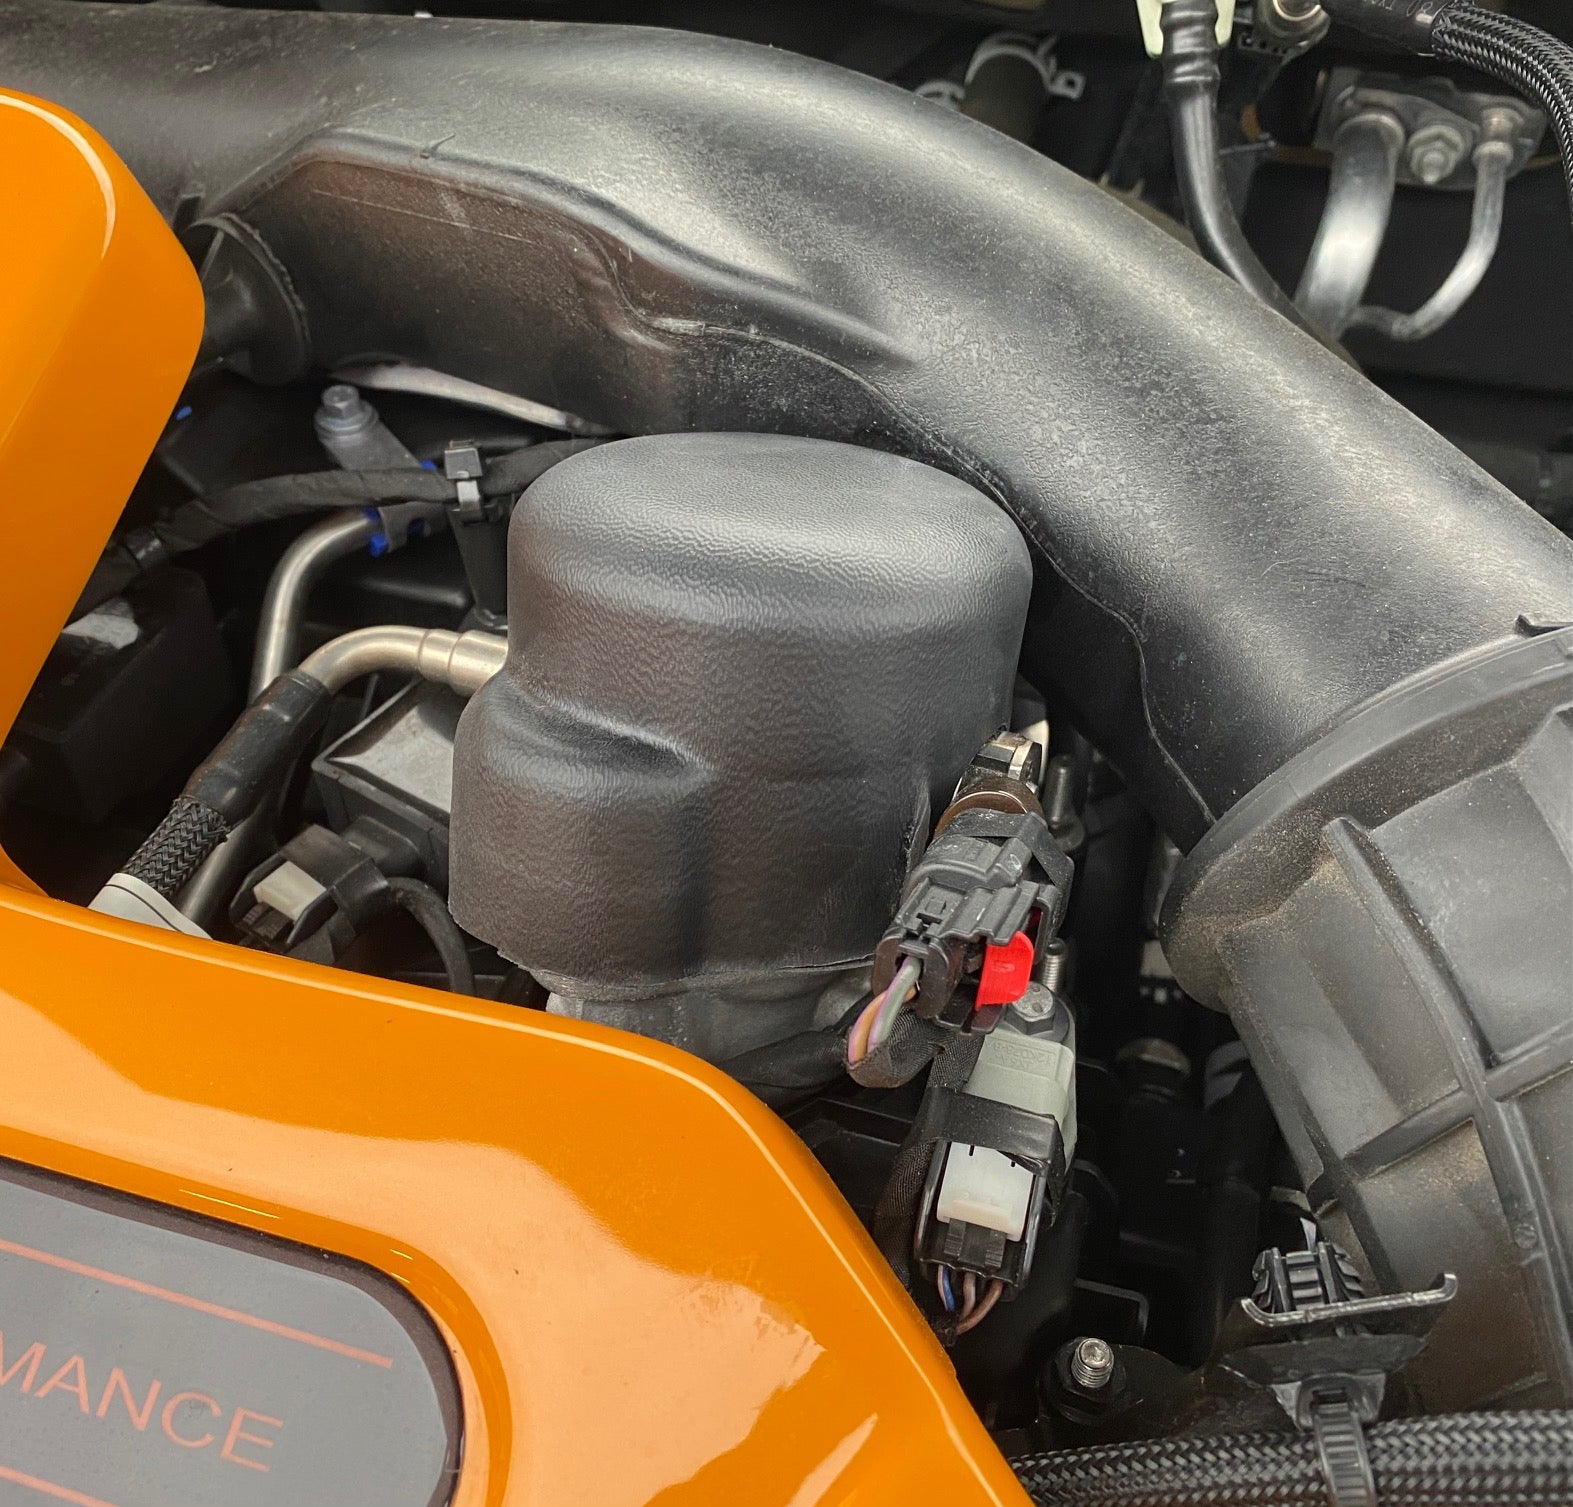 Proform Fuel Pump Cover - Mk4/4.5 Ford Focus ST Petrol (Plastic Finishes)